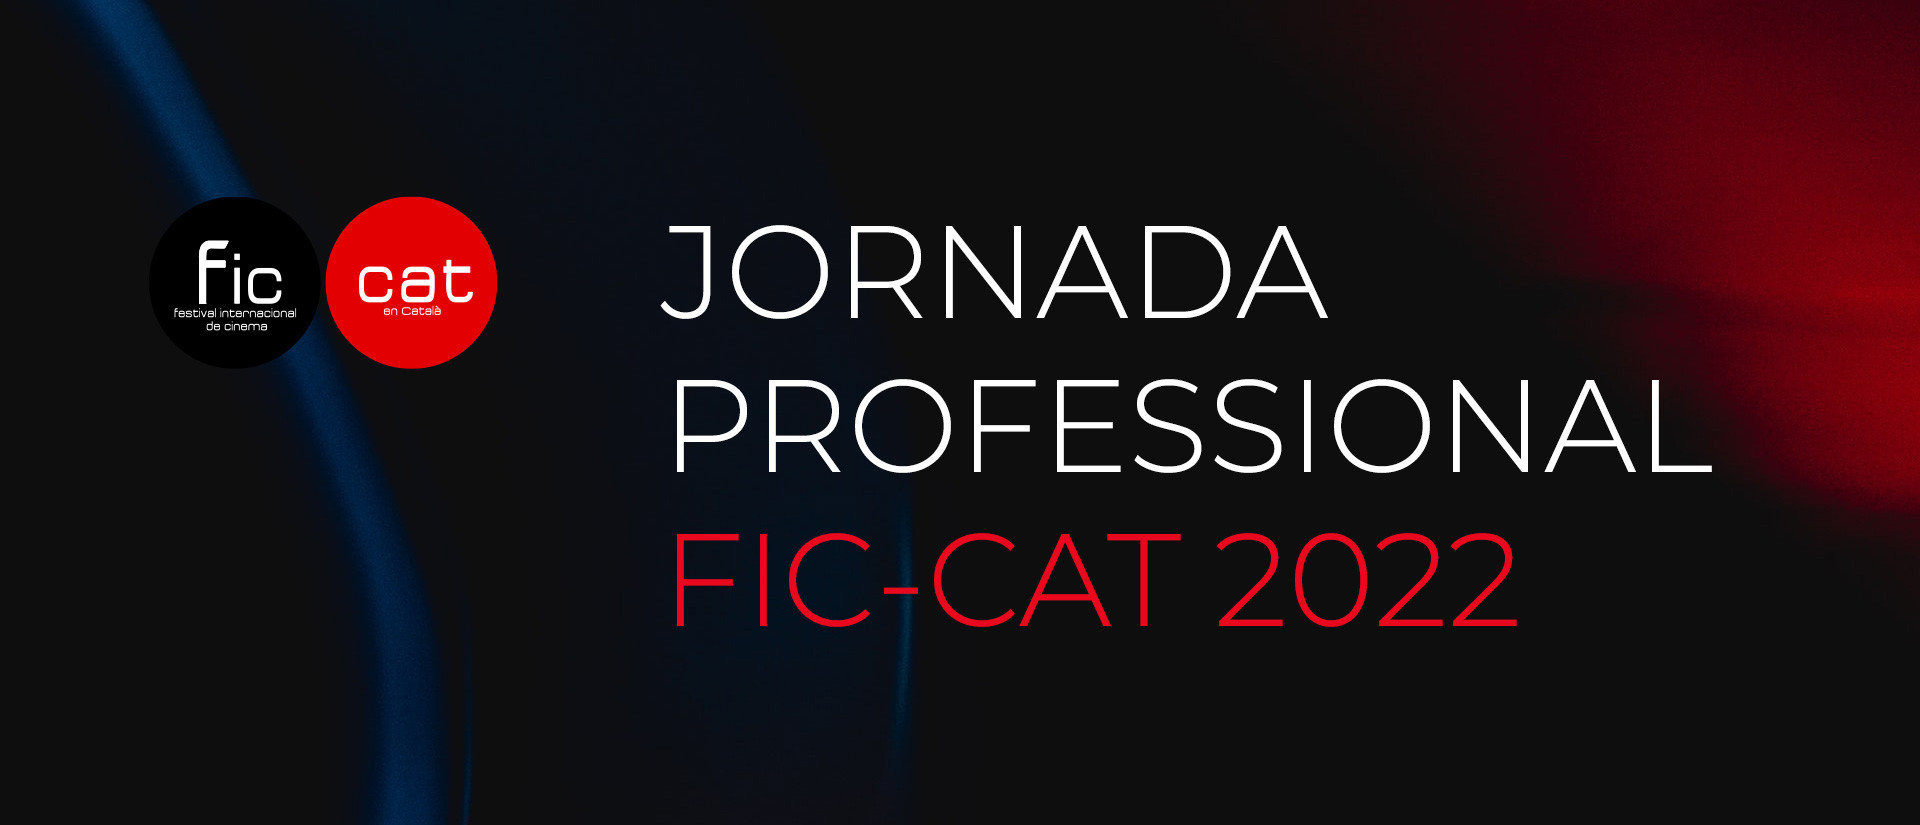 Jornada Professional FIC-CAT 2022